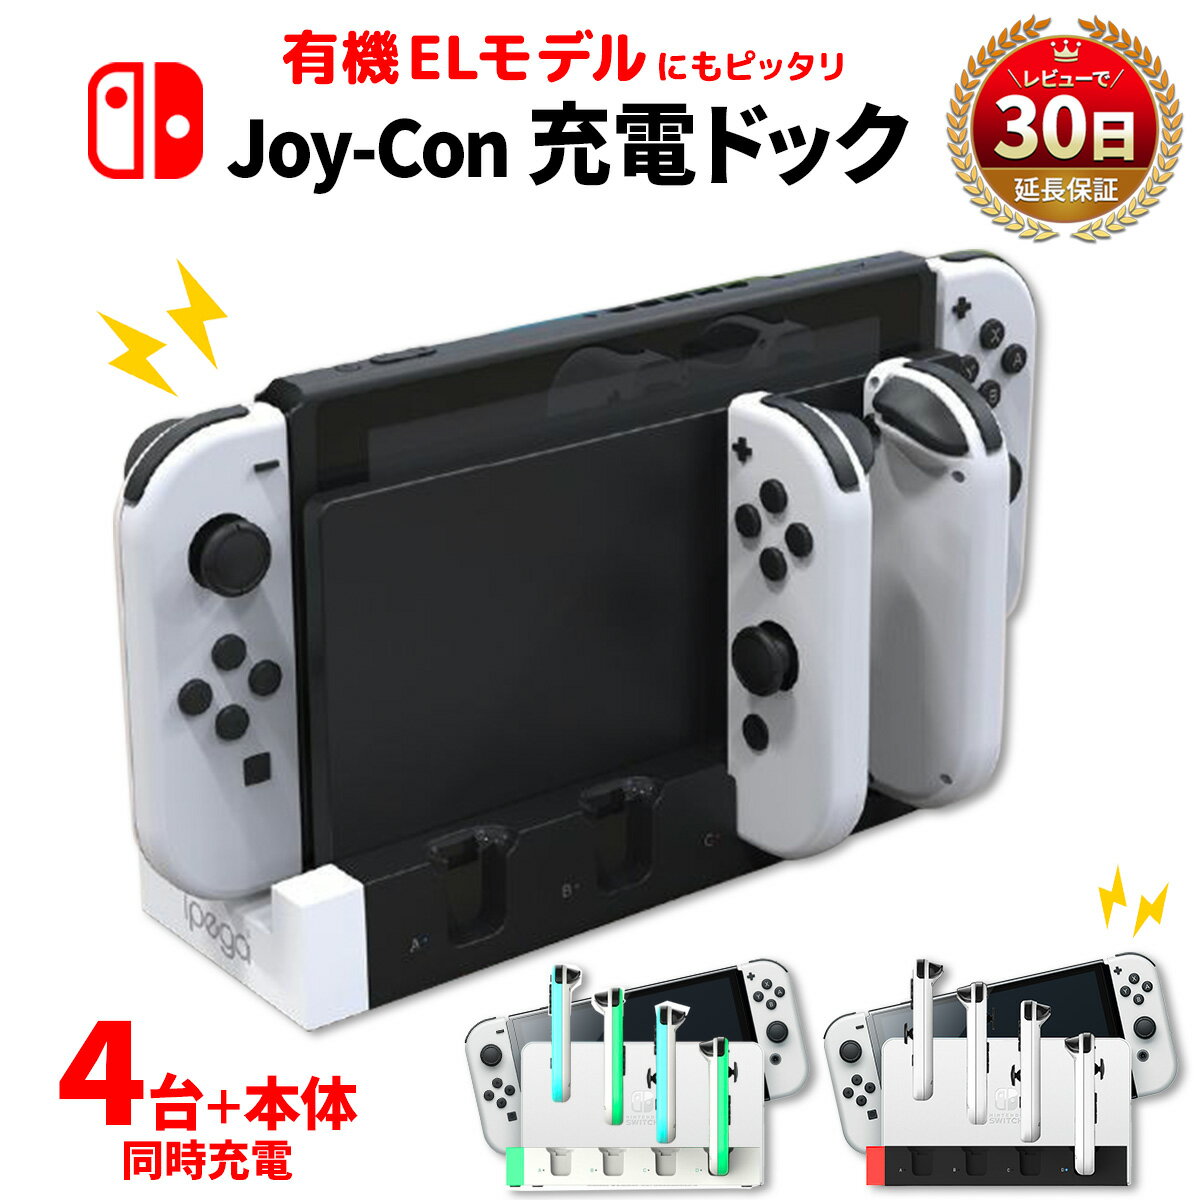 Nintendo Switch ジョイコン スイッチ コントローラー 充電 充電器 充電スタンド 純正 Joy-Con ジョイコン 充電アダプター 旧型 新型 収納 有機el switch 任天堂 スイッチ本体 簡単 ジョイコン…